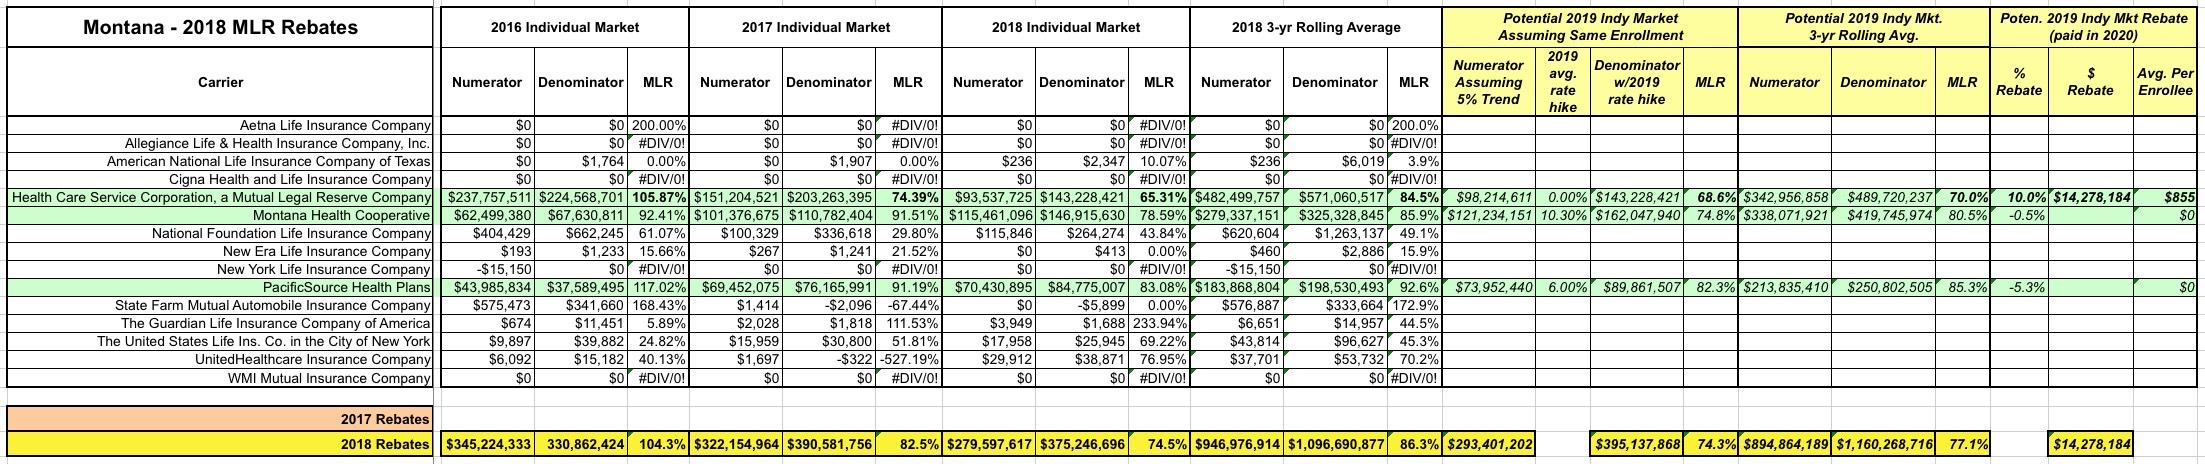 montana-2018-mlr-rebate-payments-potential-2019-rebates-aca-signups